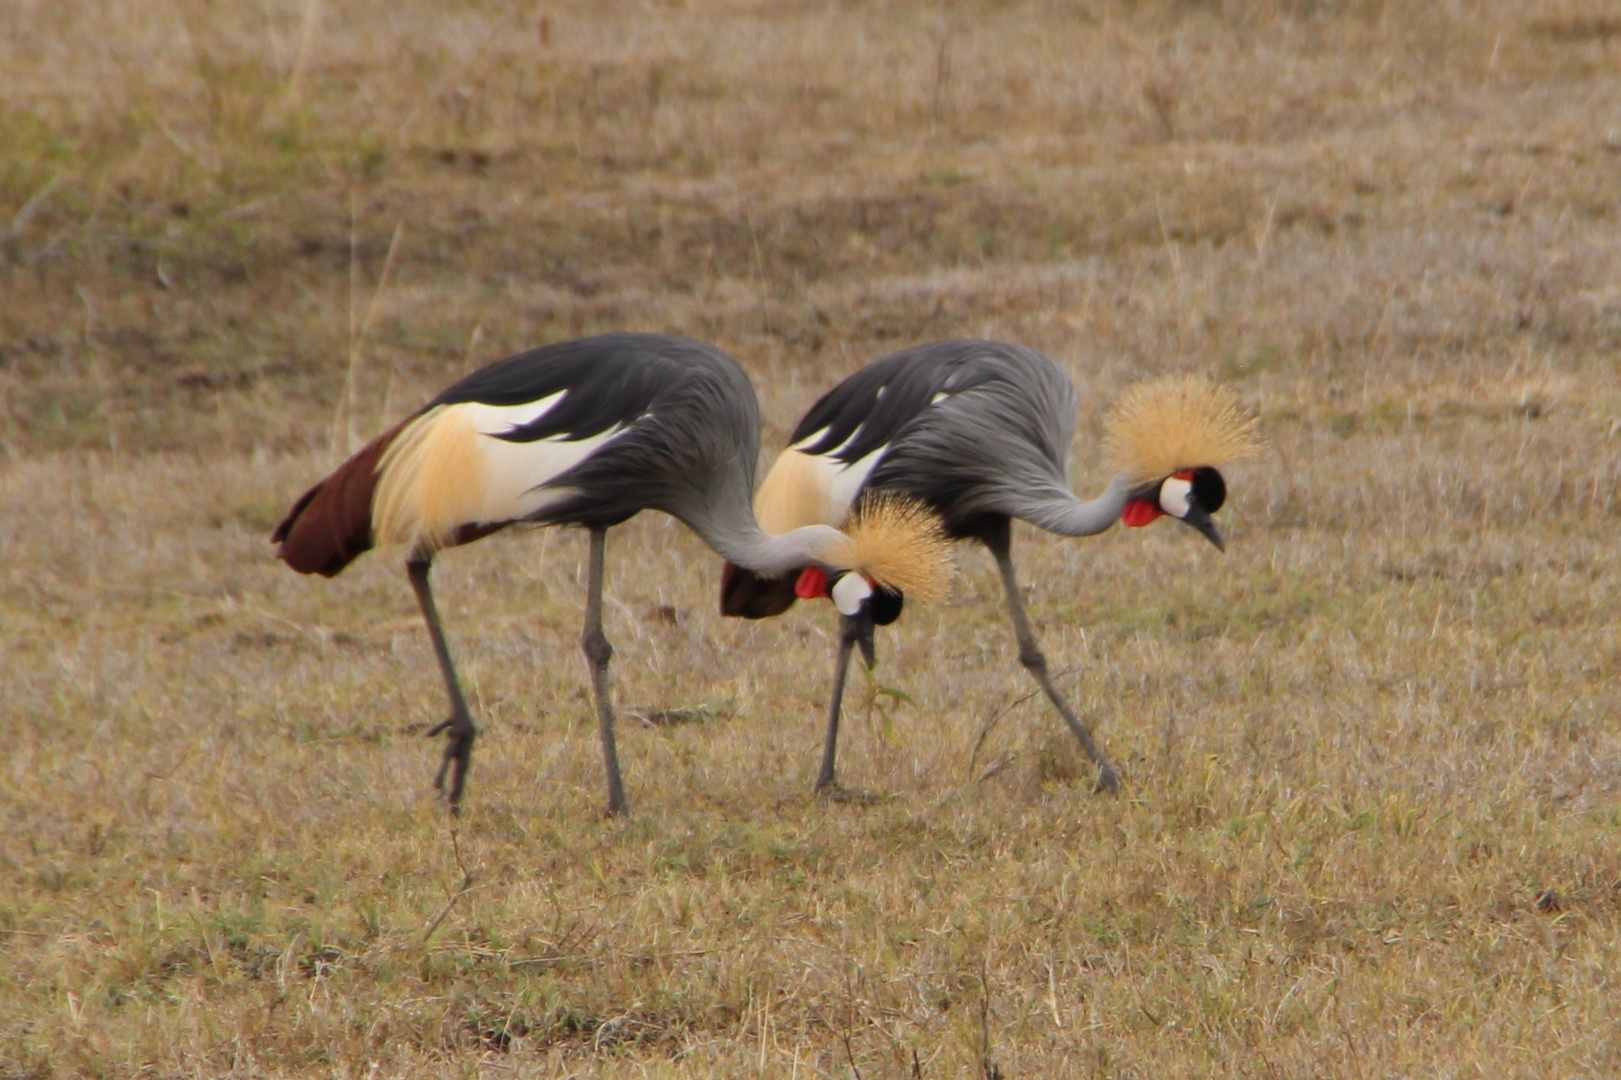 Kronenkraniche  -  Crowned Cranes